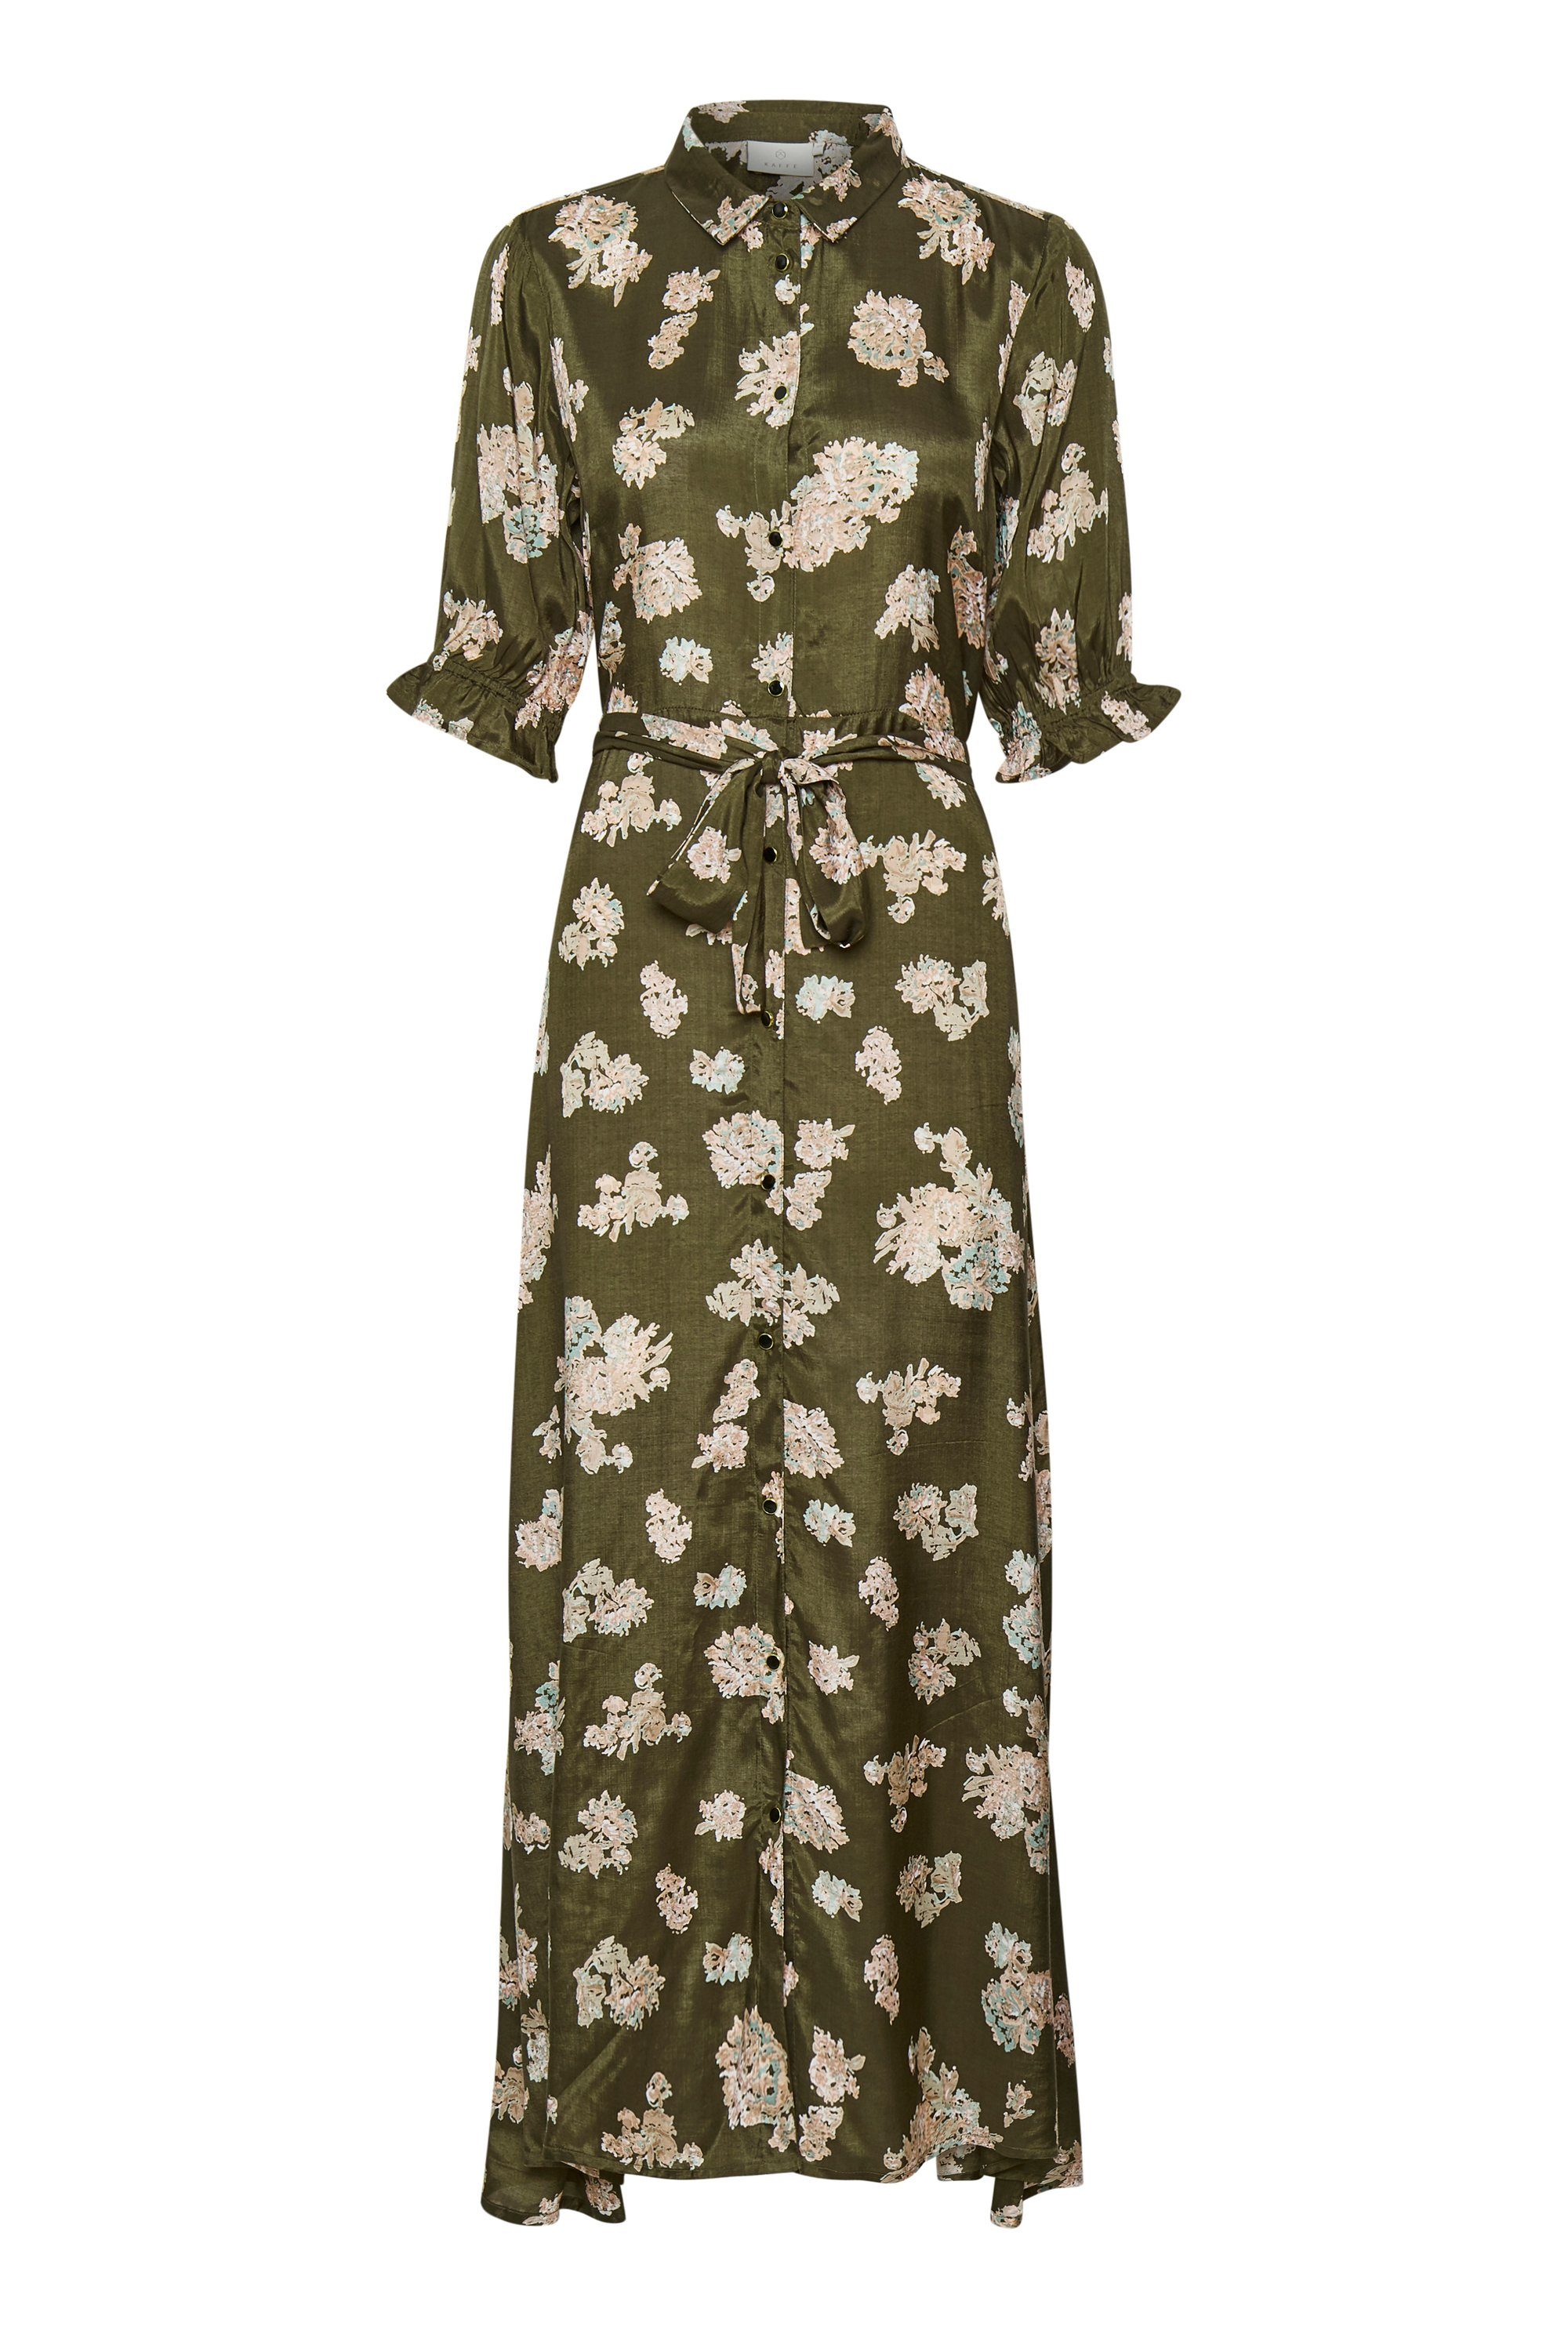 KAFFE Jerseykleid Kleid KAvelana Grape Leaf | Jerseykleider